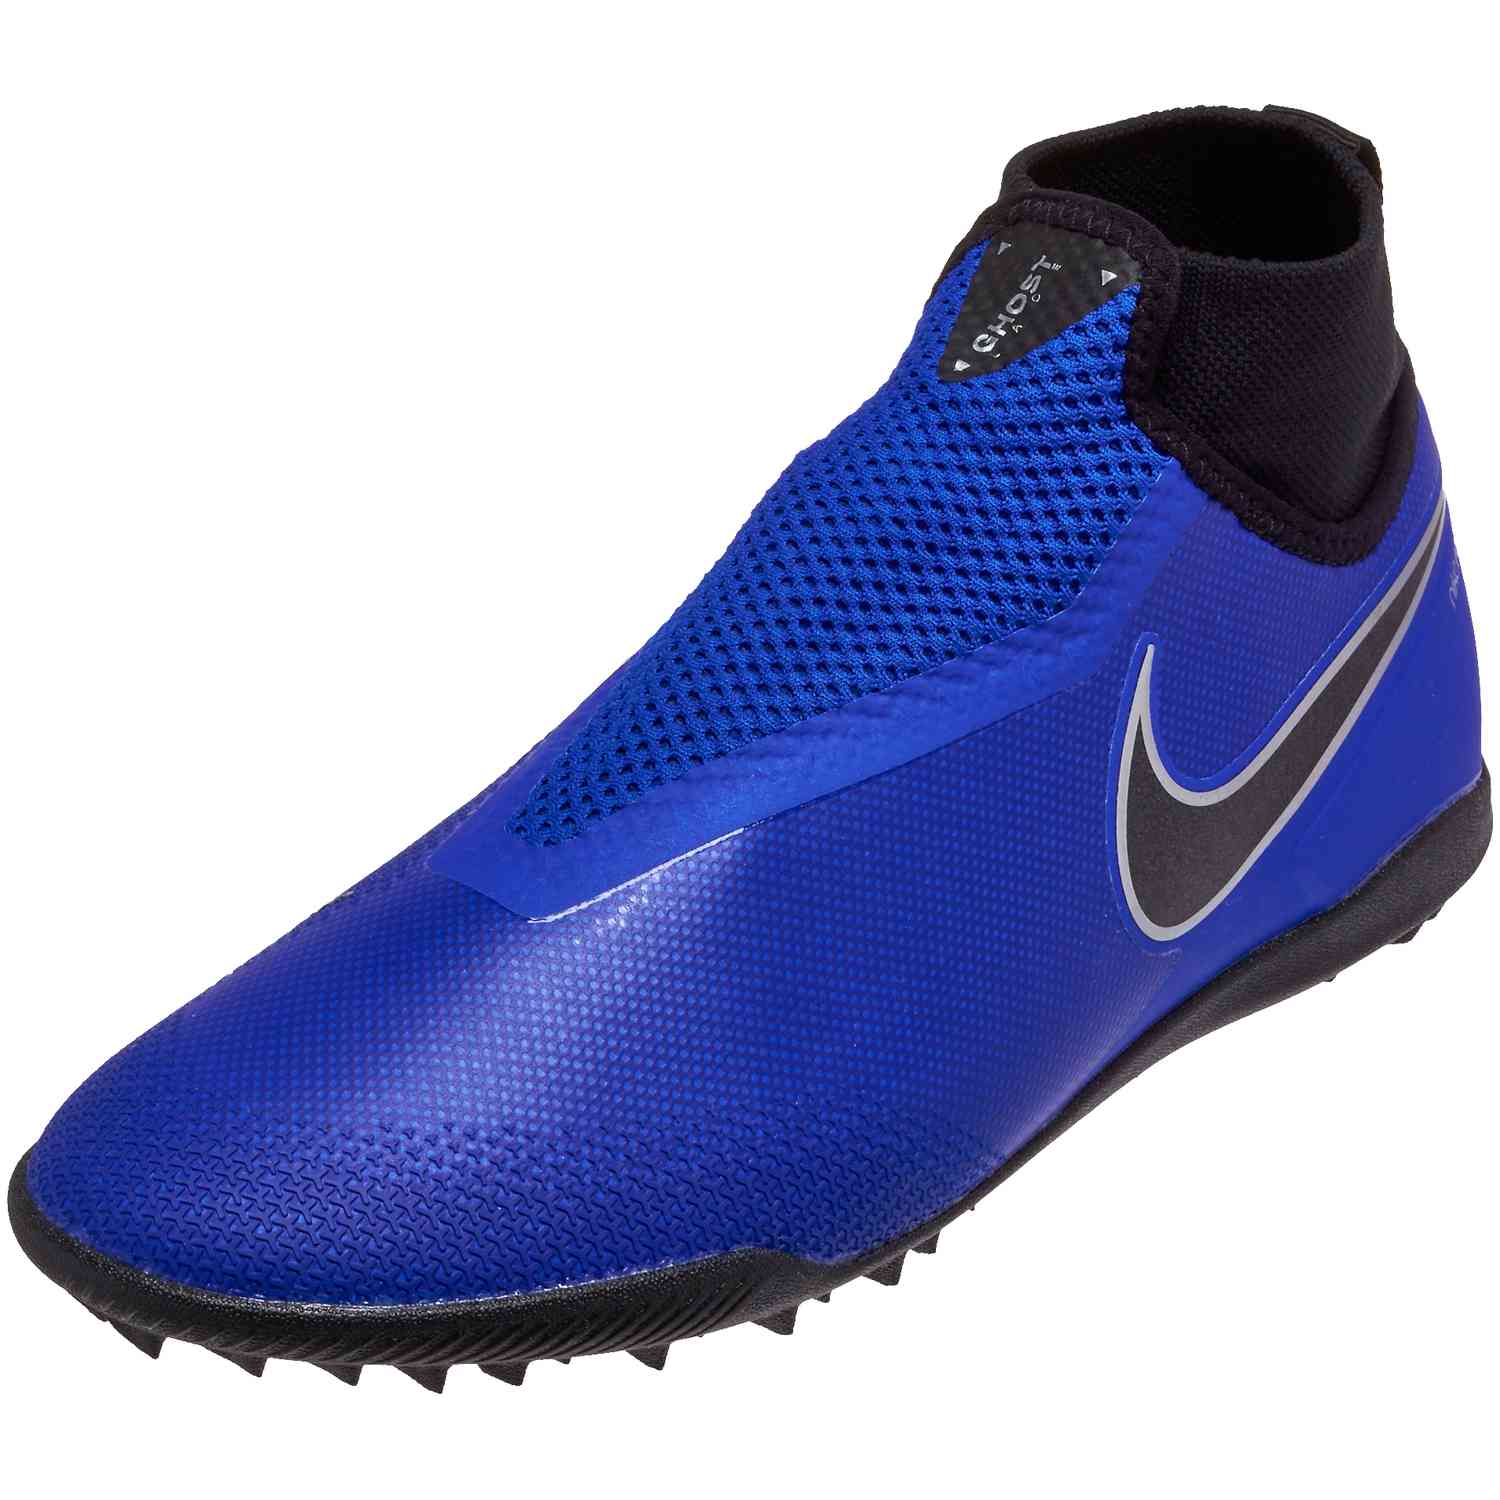 Nike Phantom Vision Pro TF - Racer Blue/Black/Metallic Silver/Volt -